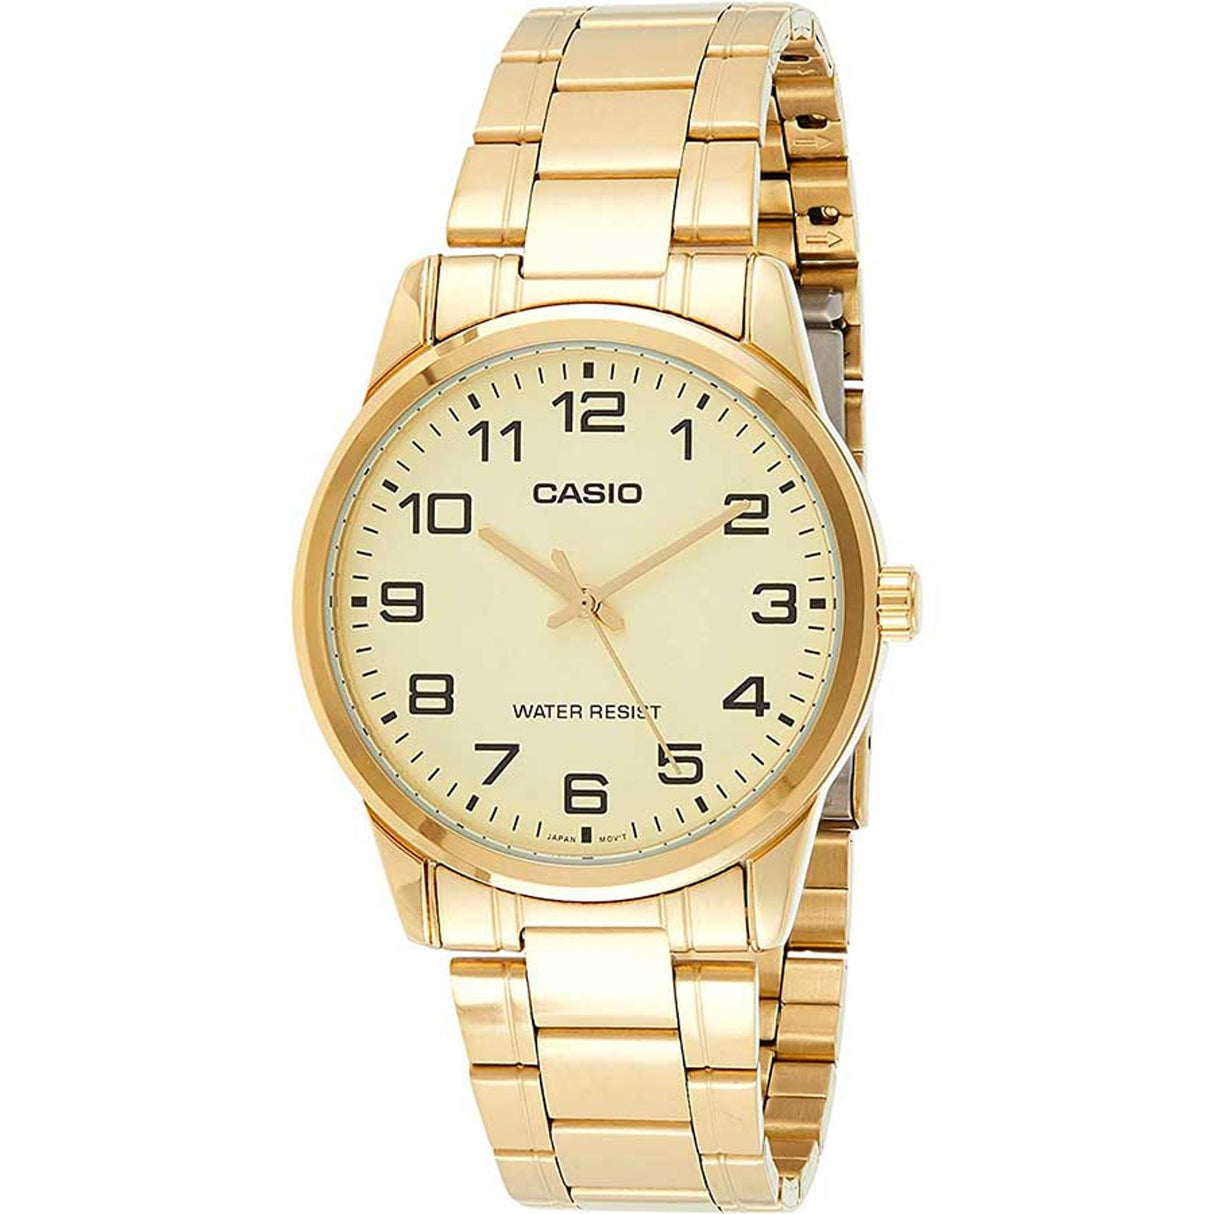 Women's watch Petite watch Classic watch Quartz watch Gift watch 3-hand watch Everyday watch Comfortable watch Secure watch Polished watch Organized watch